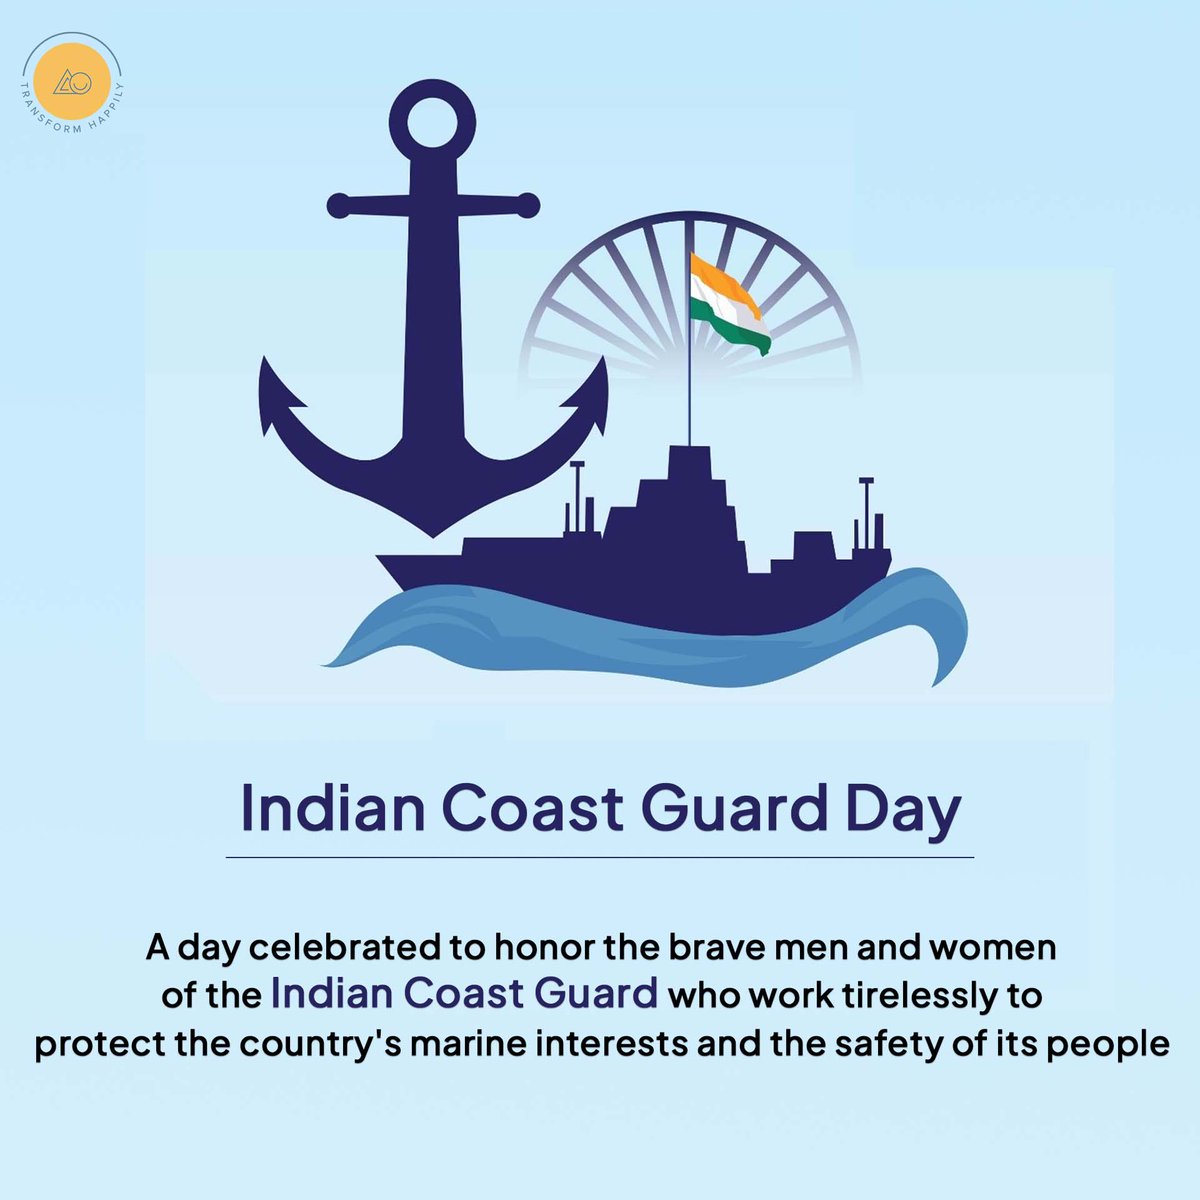 On 1st February, the Indian Coast Guard celebrates its foundation day. 

#india #army #indian #upsc #ias #indianarmy #ips #generalknowledge #specialforces #jaihind #indianairforce #bsf #indiannavy #nda #ima #ncc #marcos #defence #ota #ina #indiannavypride #indiannavymarcos